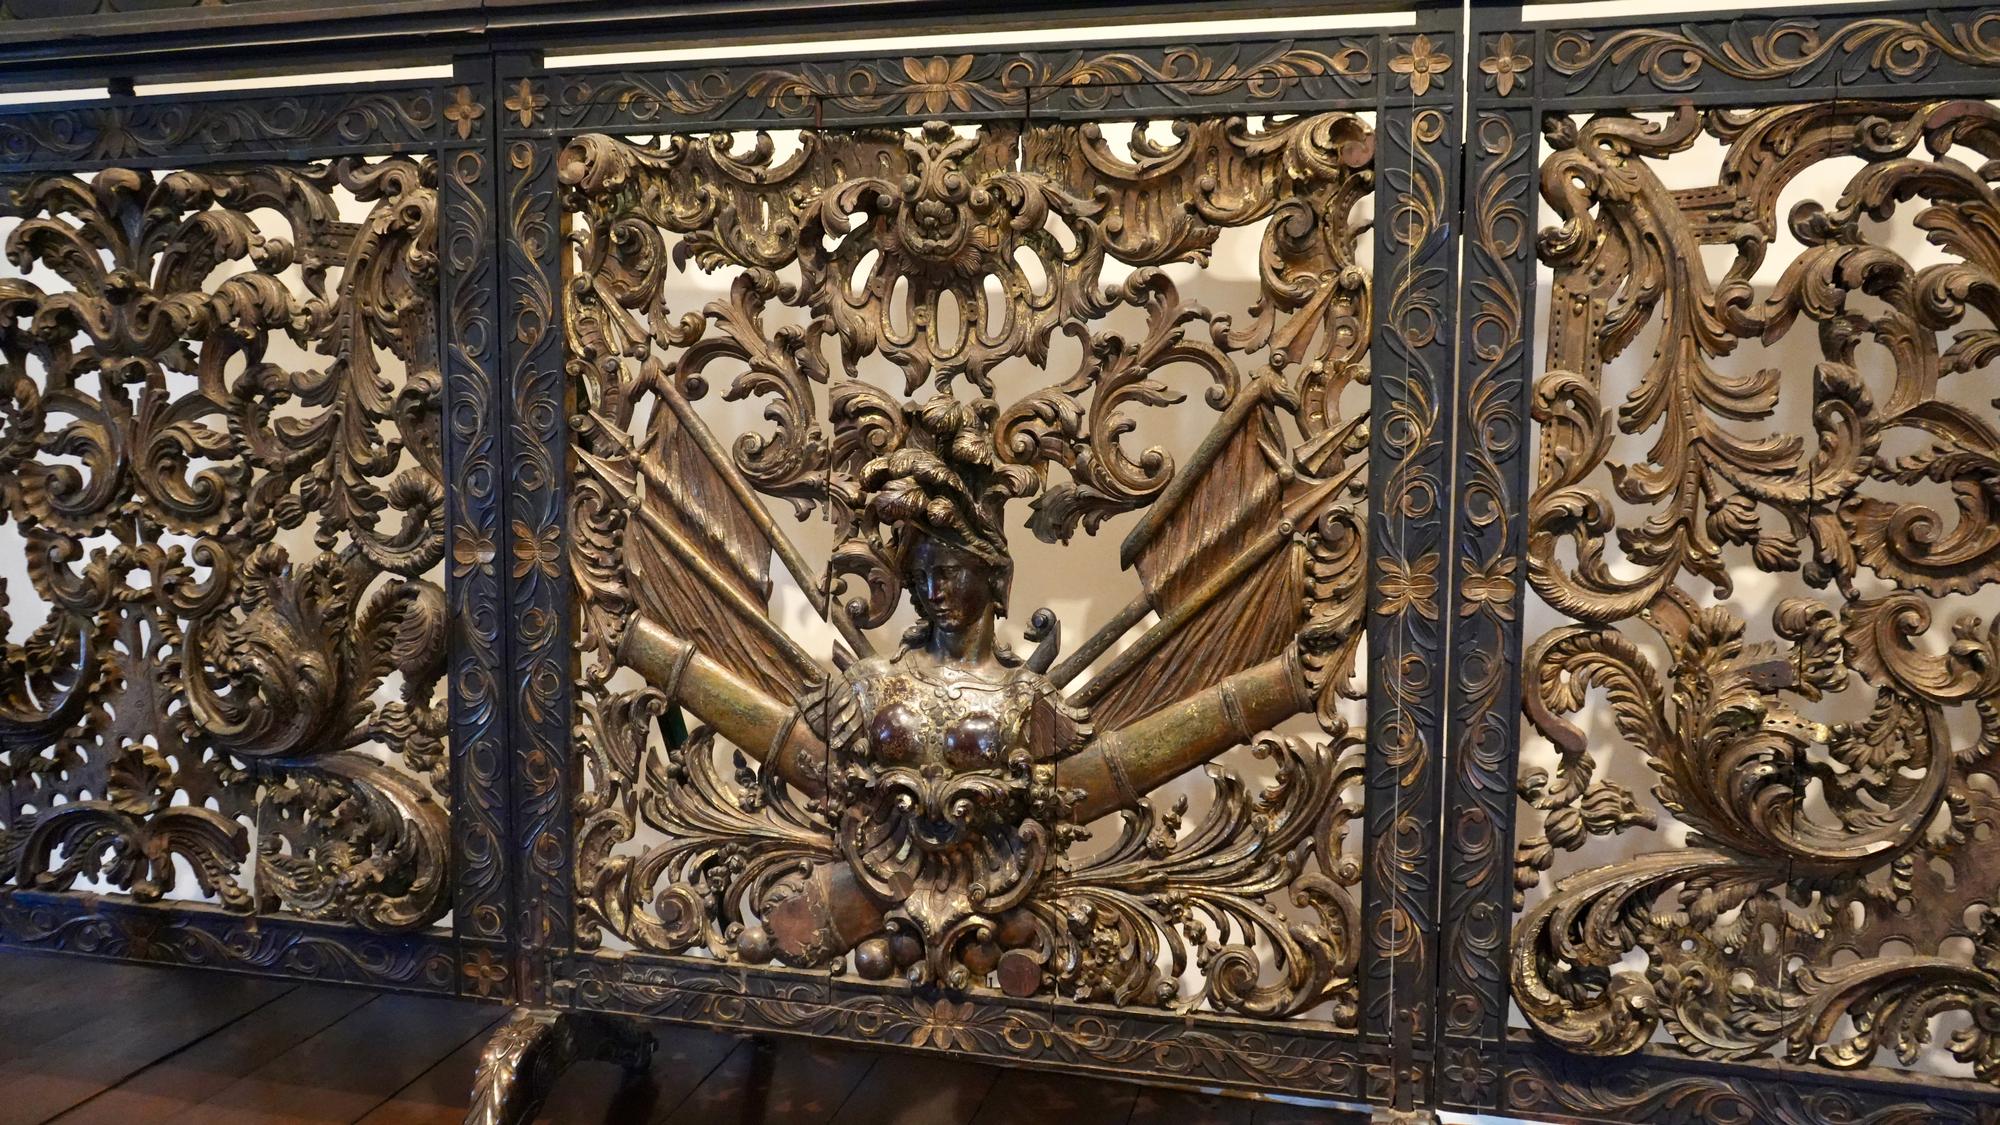 Ornate wood-carved panels